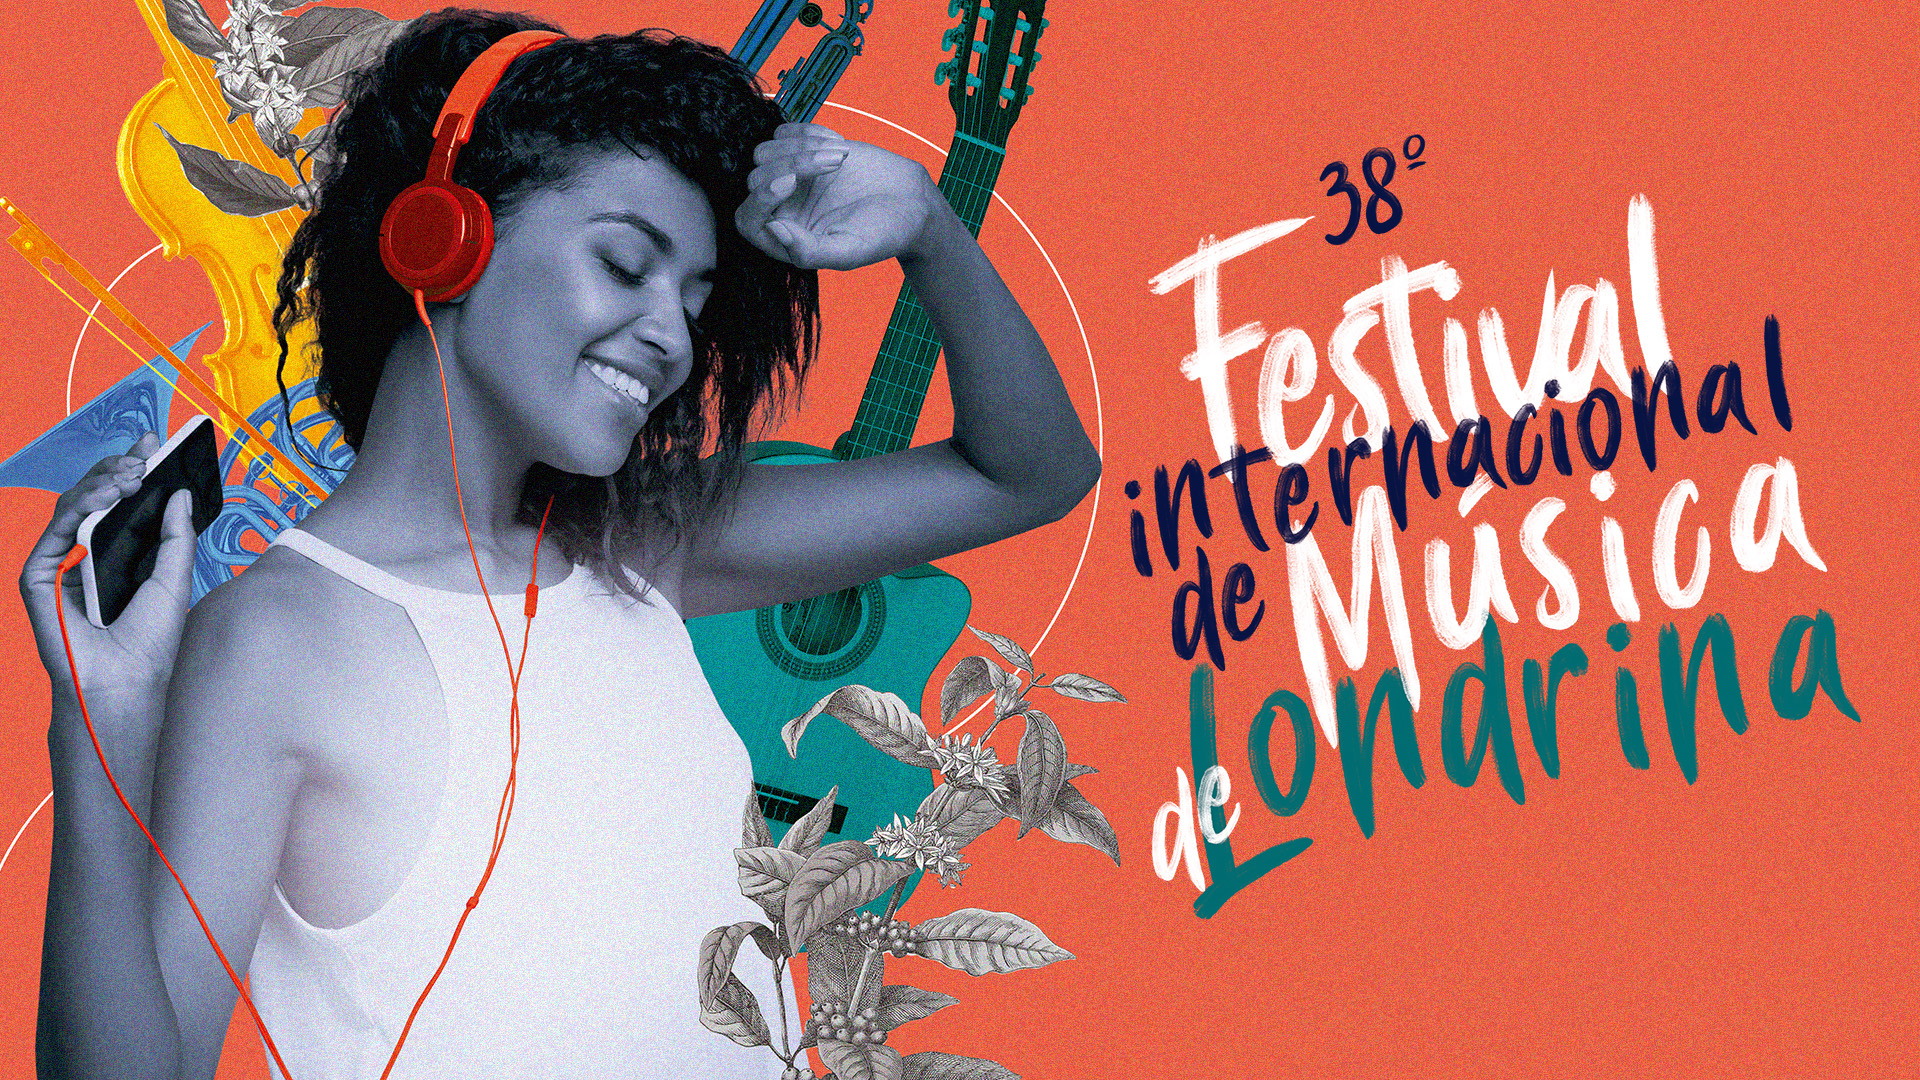 38º Festival de Música de Londrina